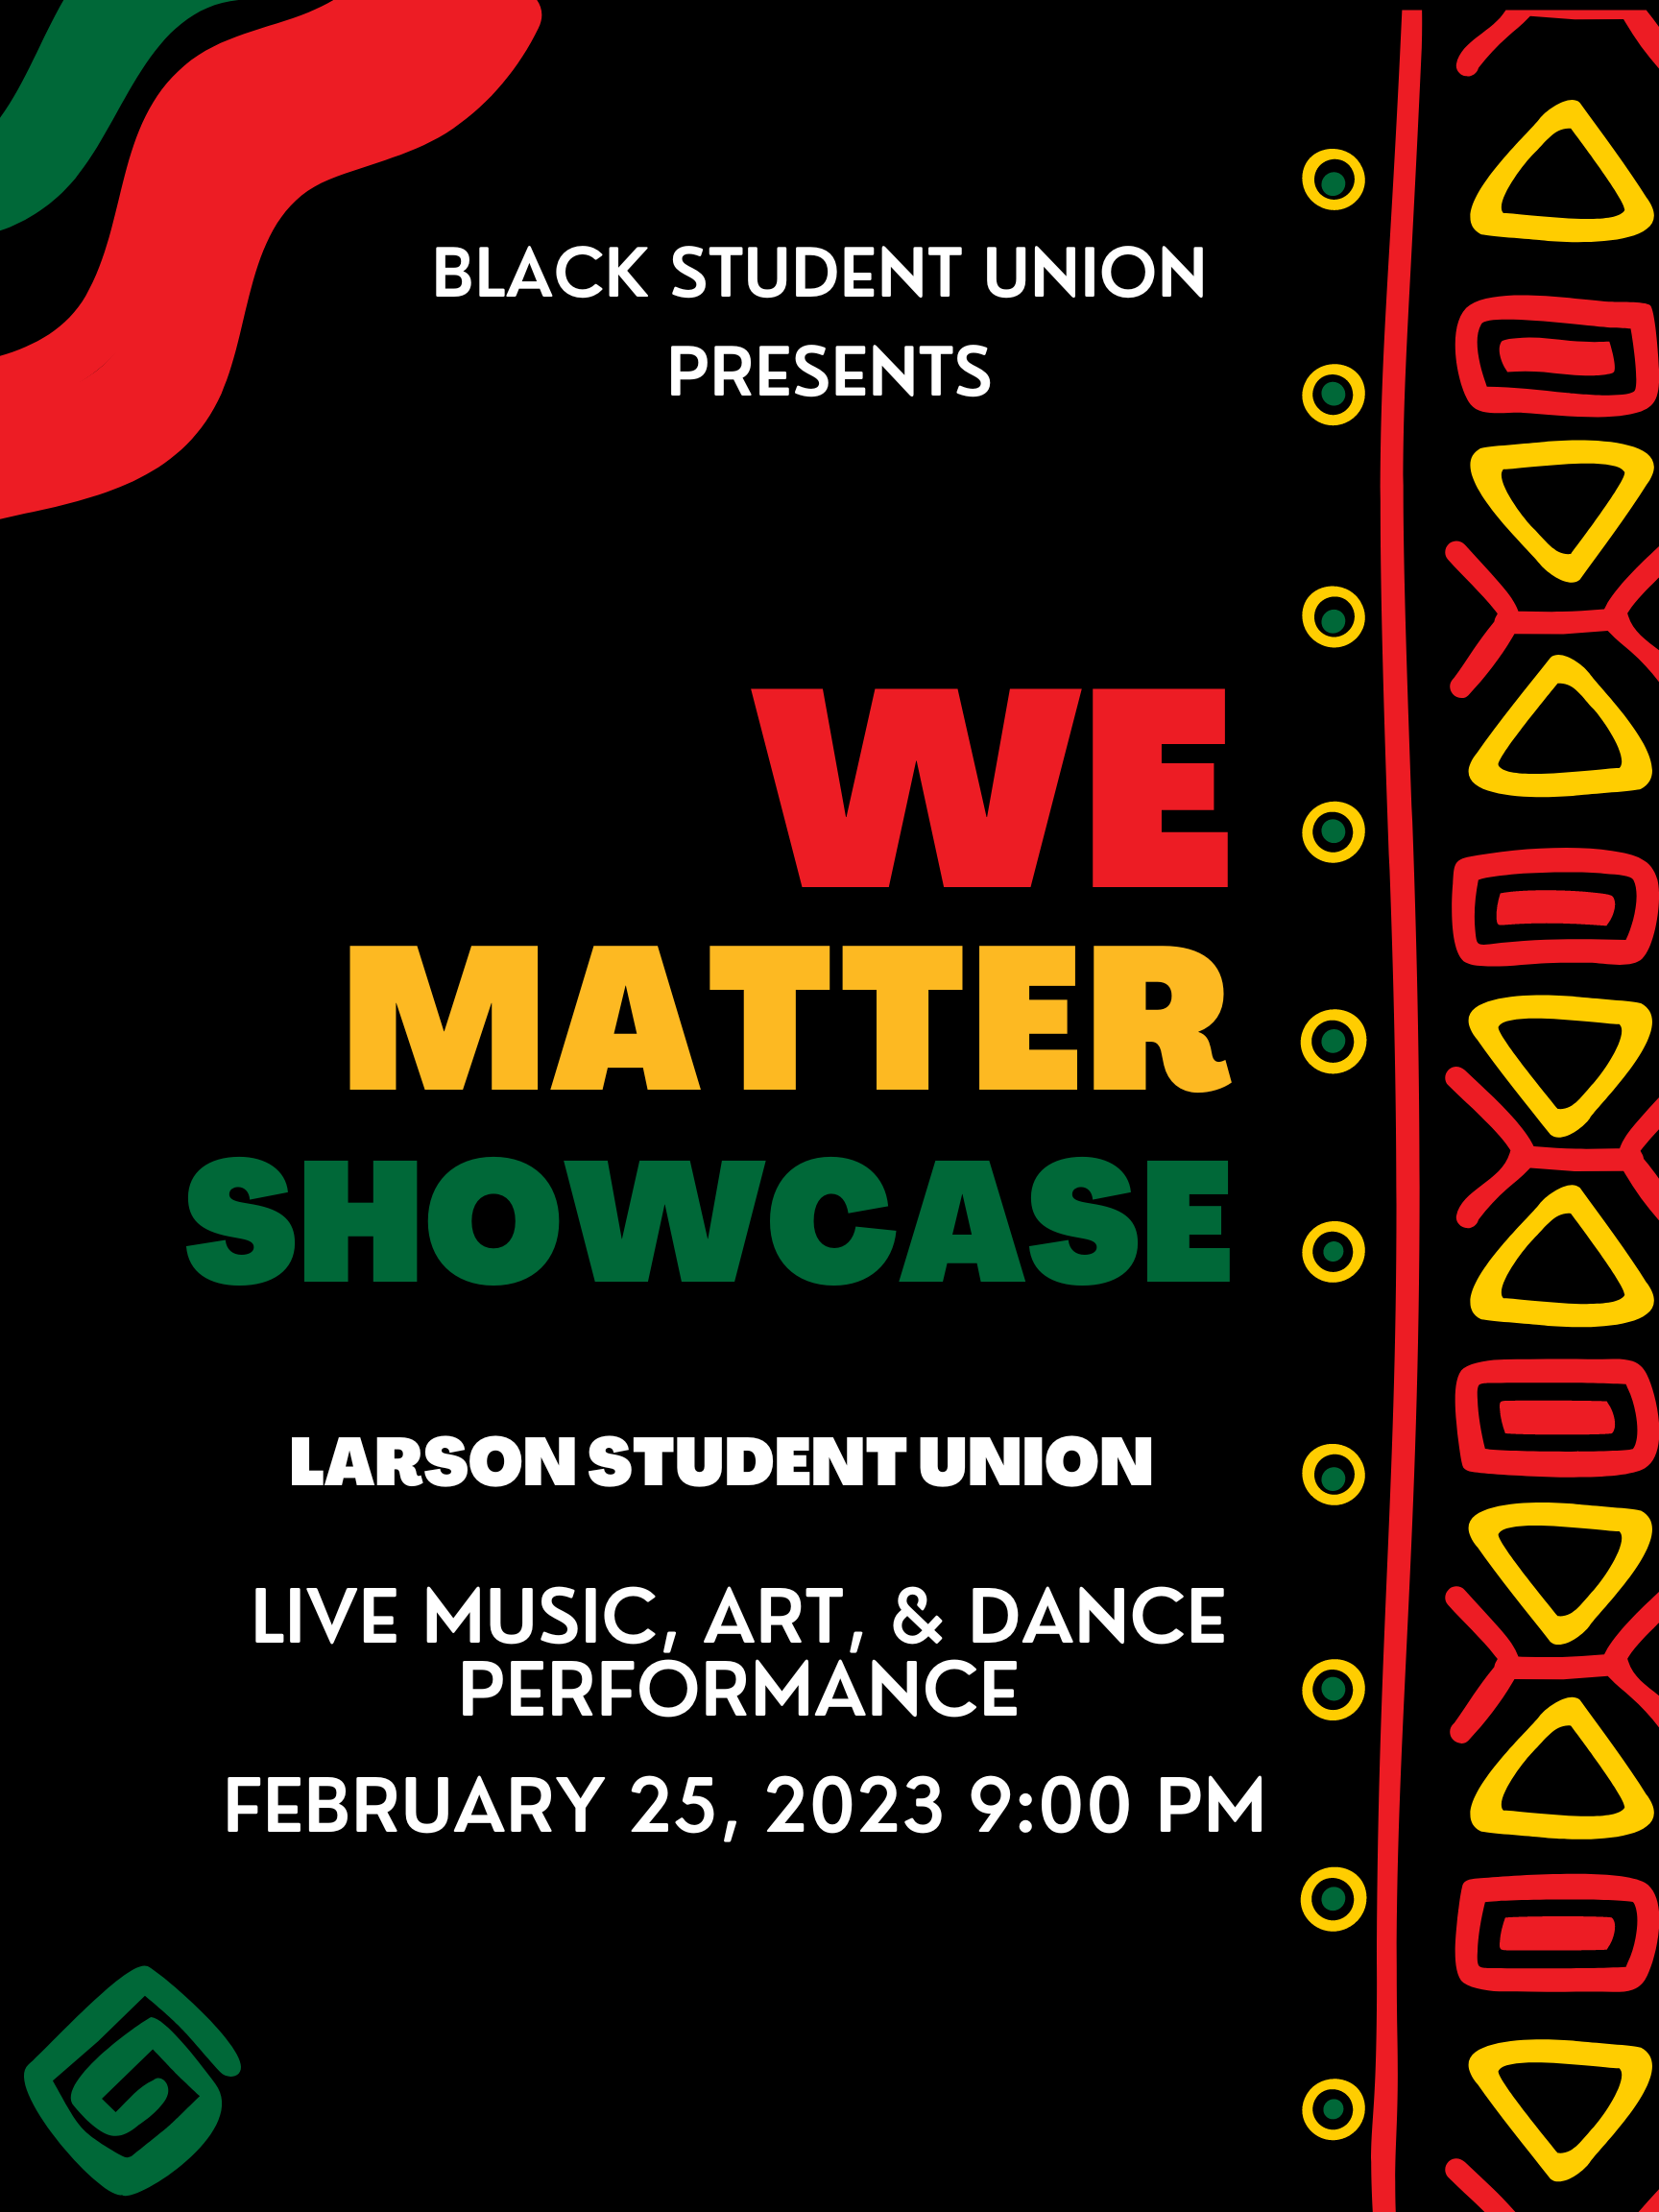 We matter showcase